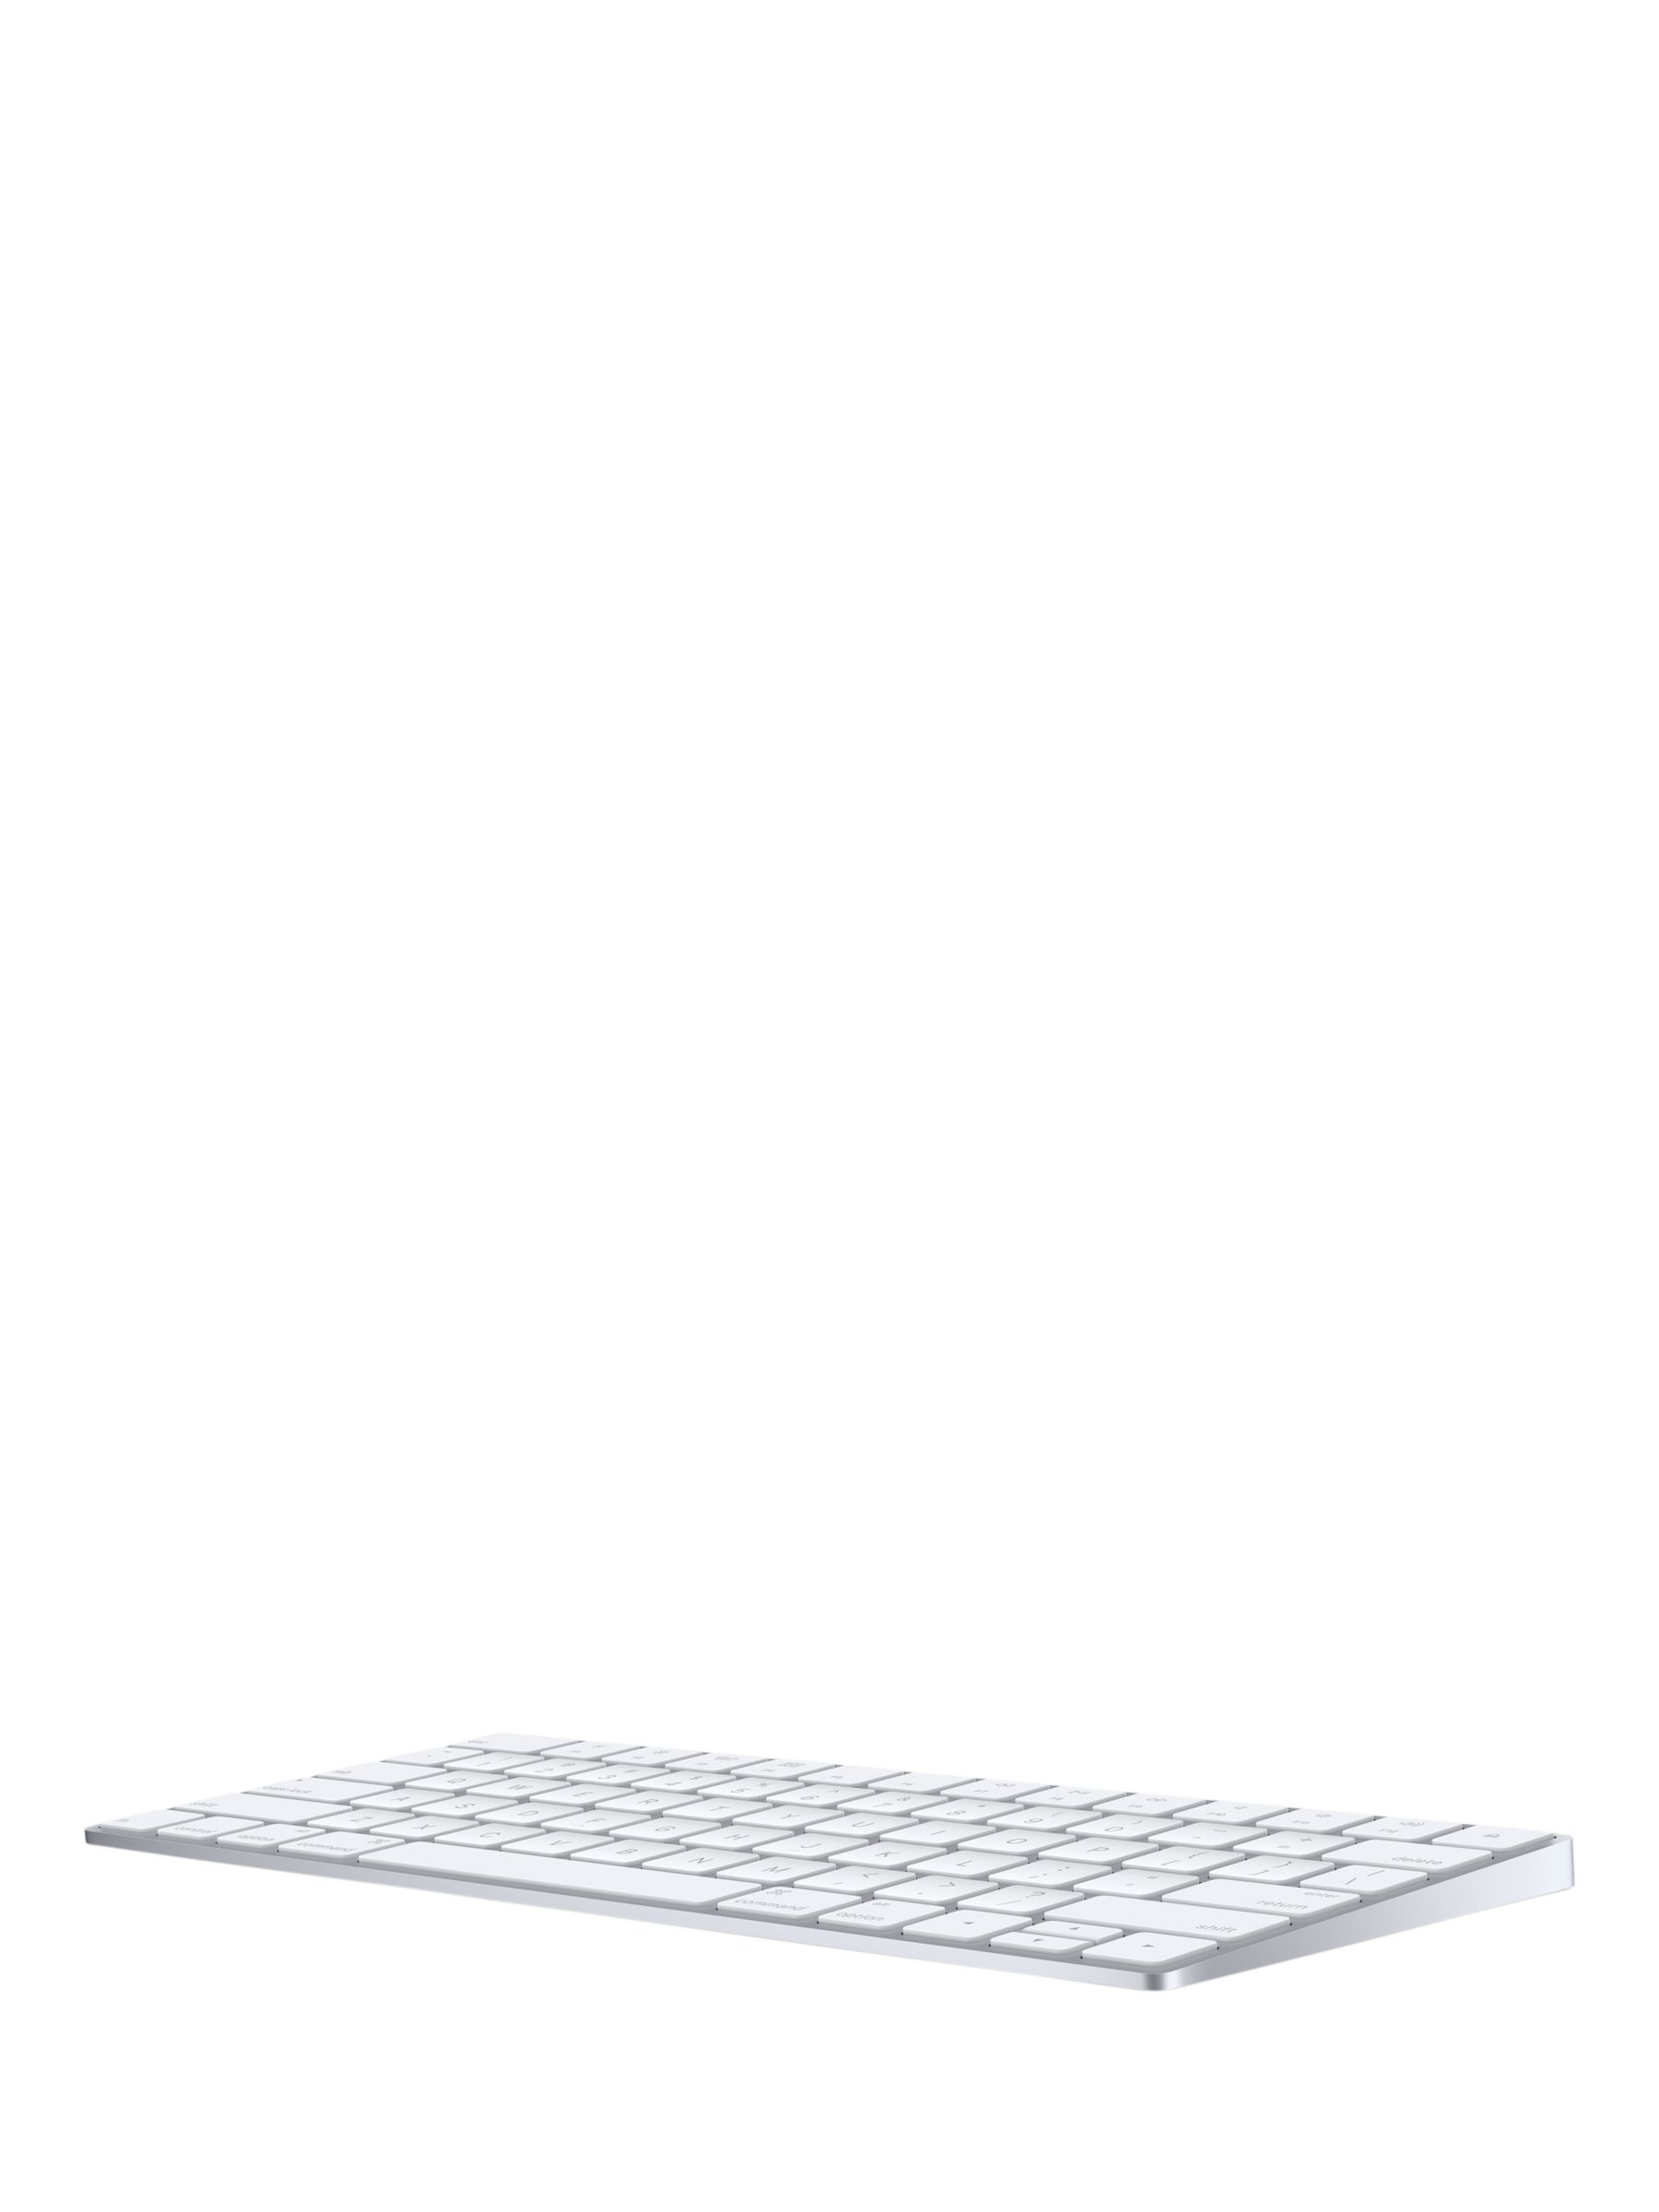 Apple Magic Keyboard 2 (2015), British English, Silver